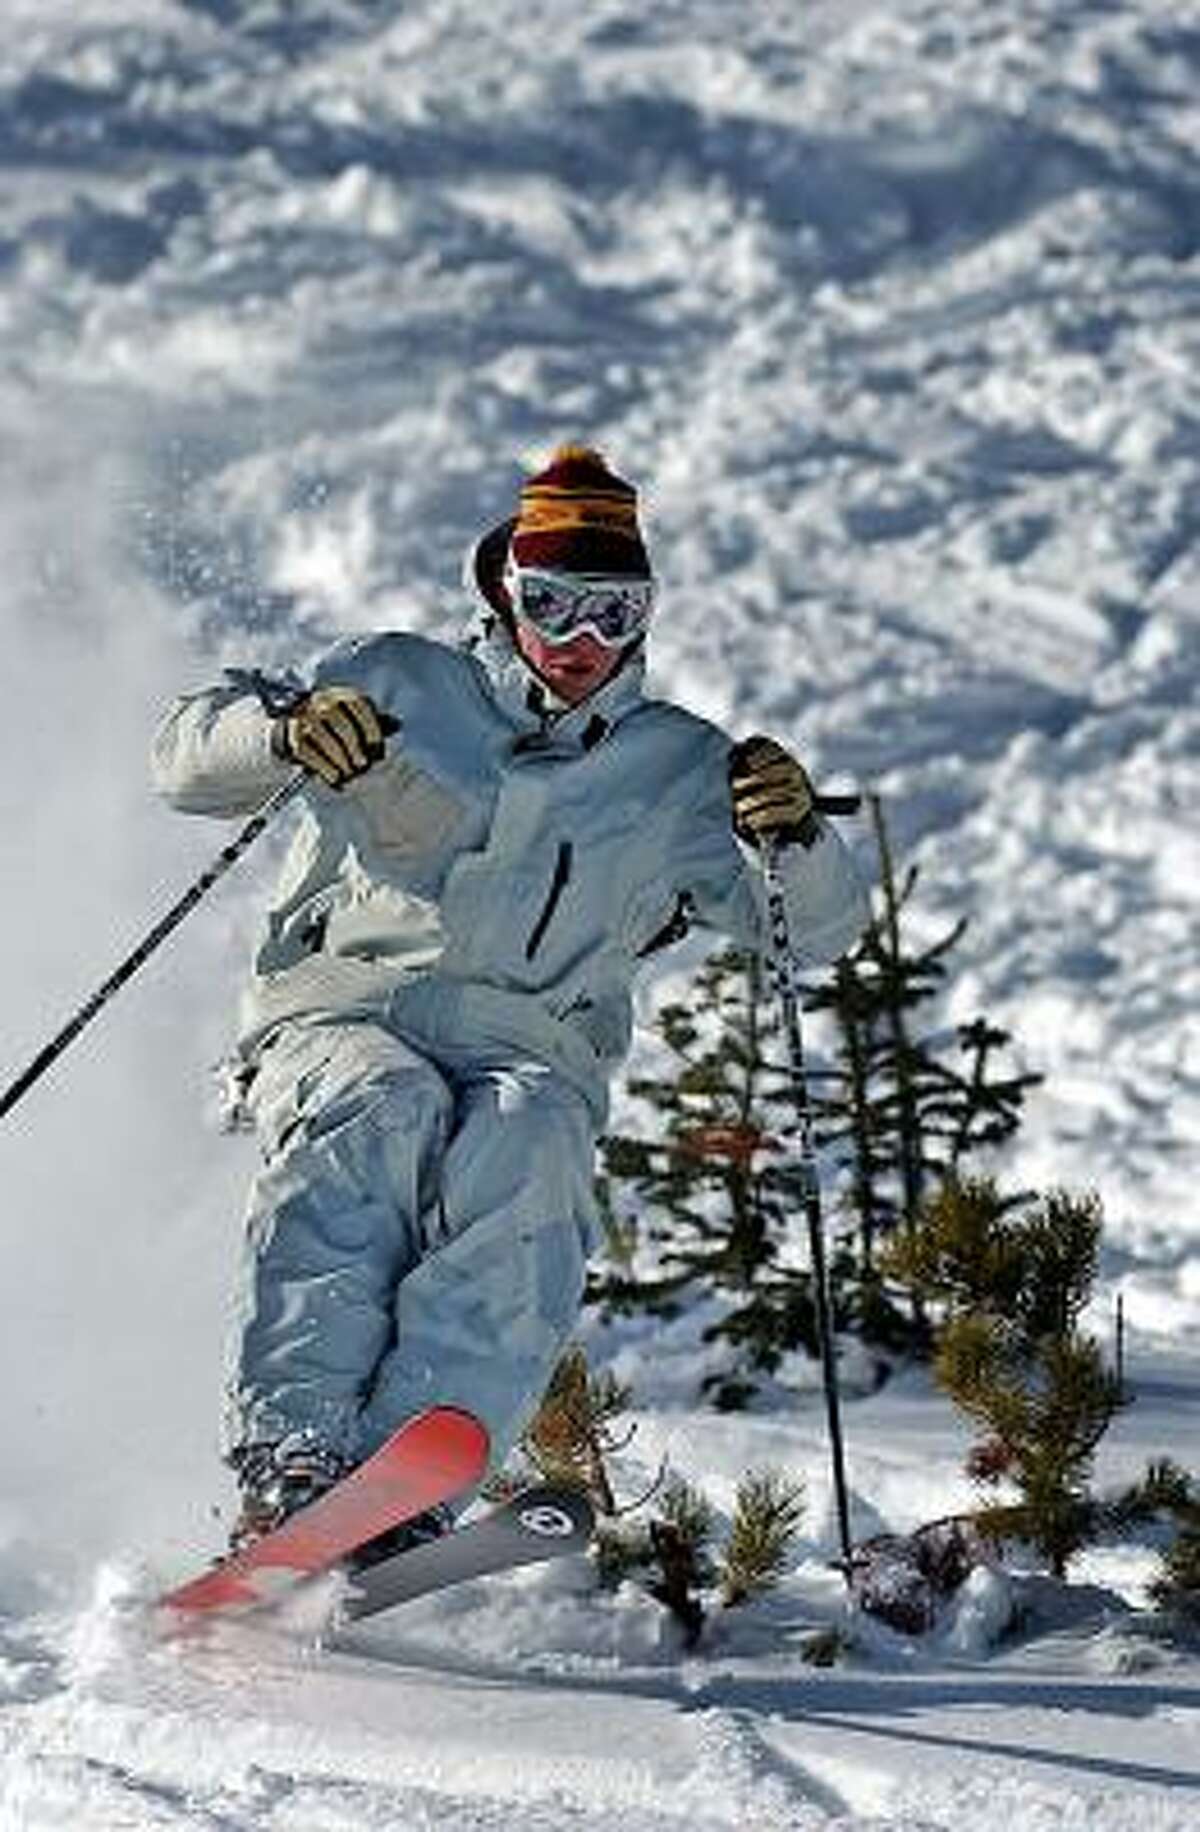 DOWNHILL: A skier plows through powder snow at Vail Mountain Resort.